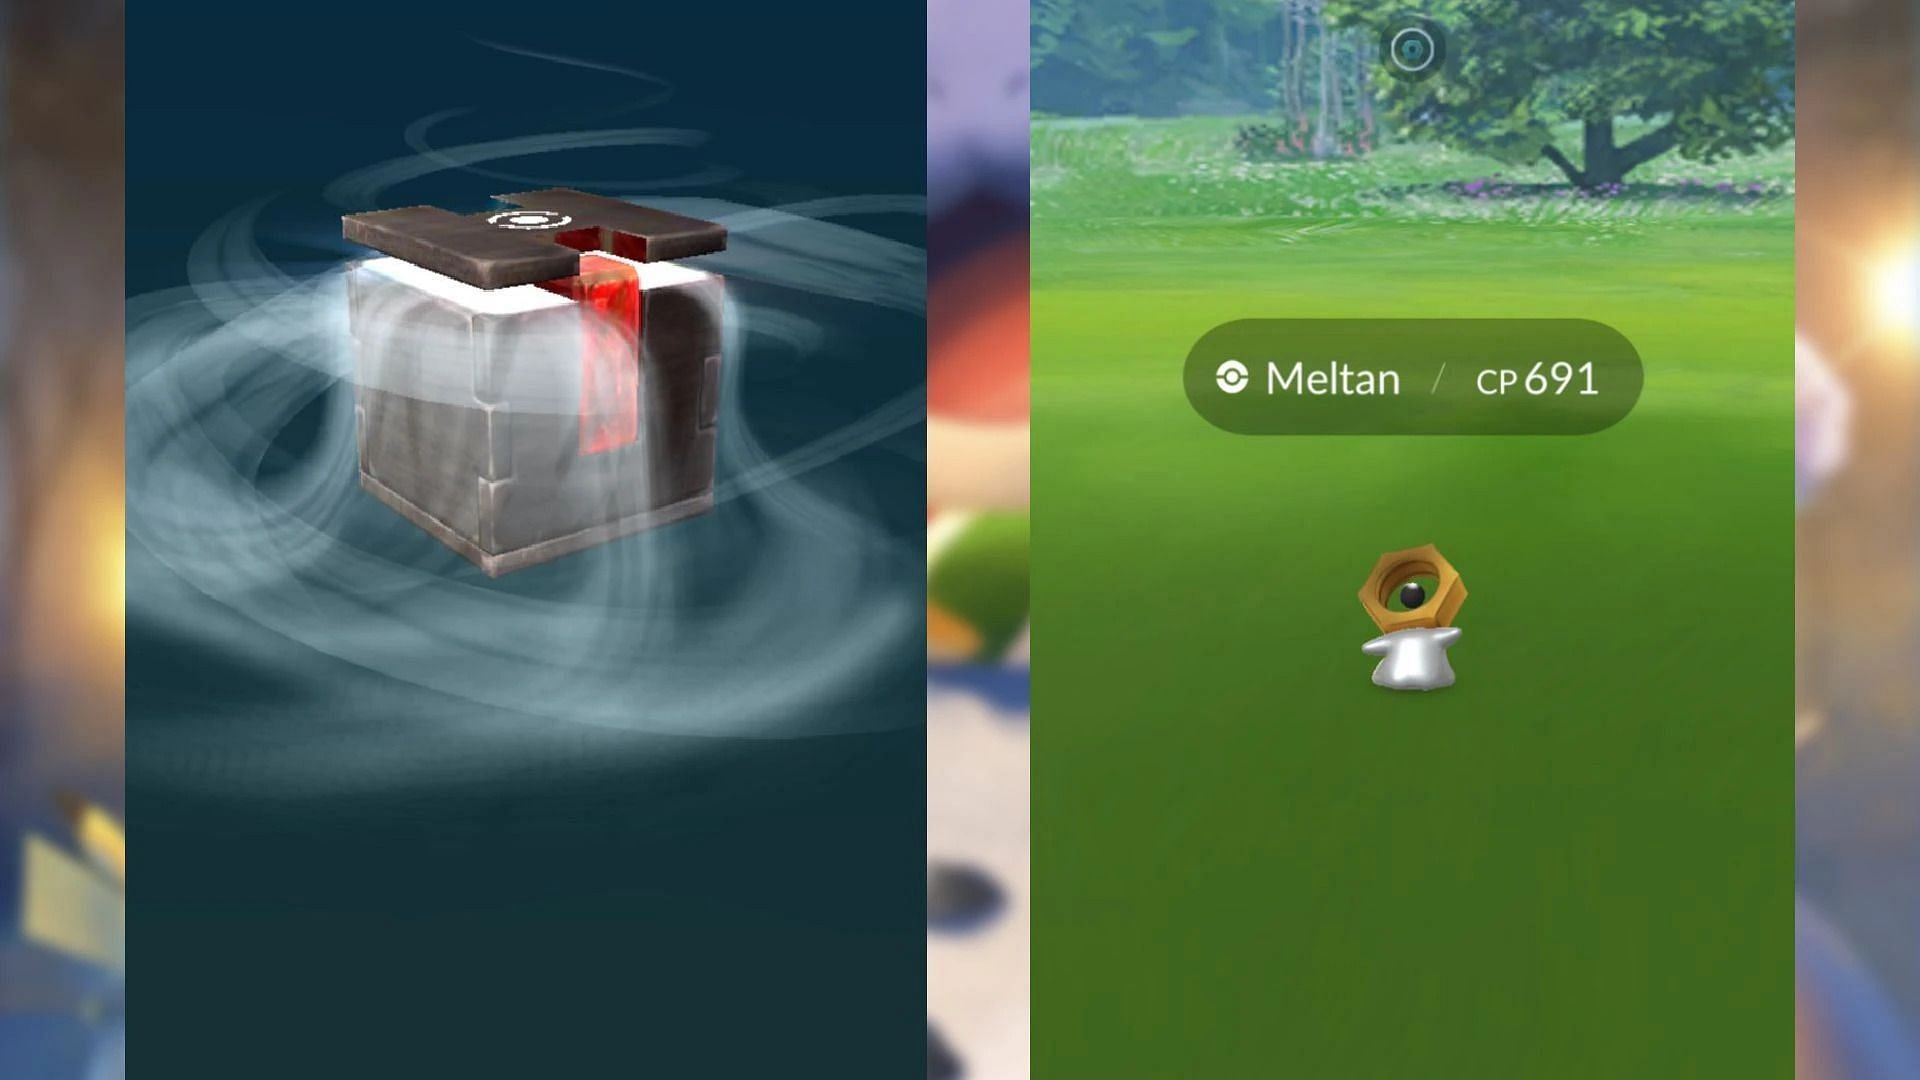 Mystery meltan Box for Pokemon Go. 